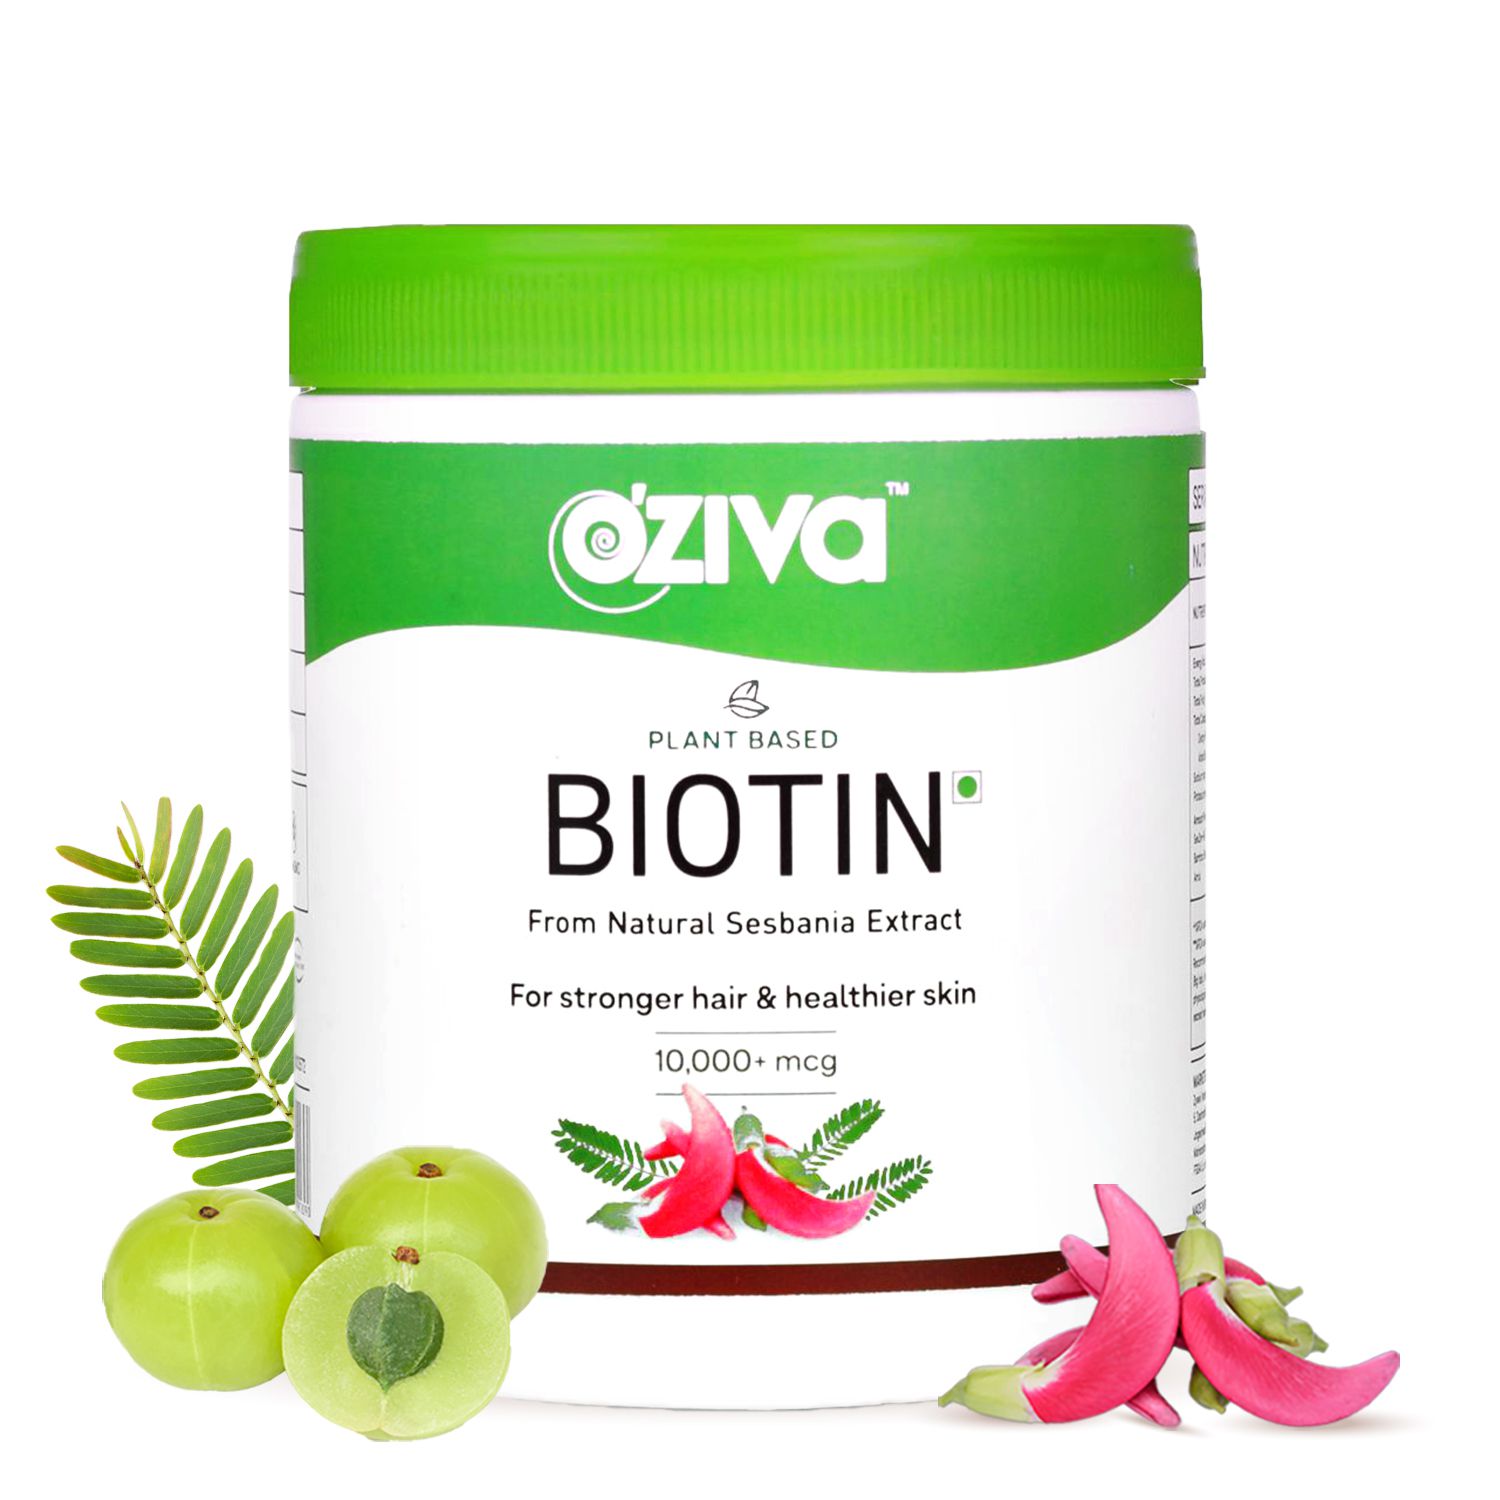 OZiva Plant Based Biotin 10000+ mcg (with Sesbania Agati Extract, Bamboo Shoot, Amla, Pomegranate), For Stronger Hair & Healthier Skin, 125g